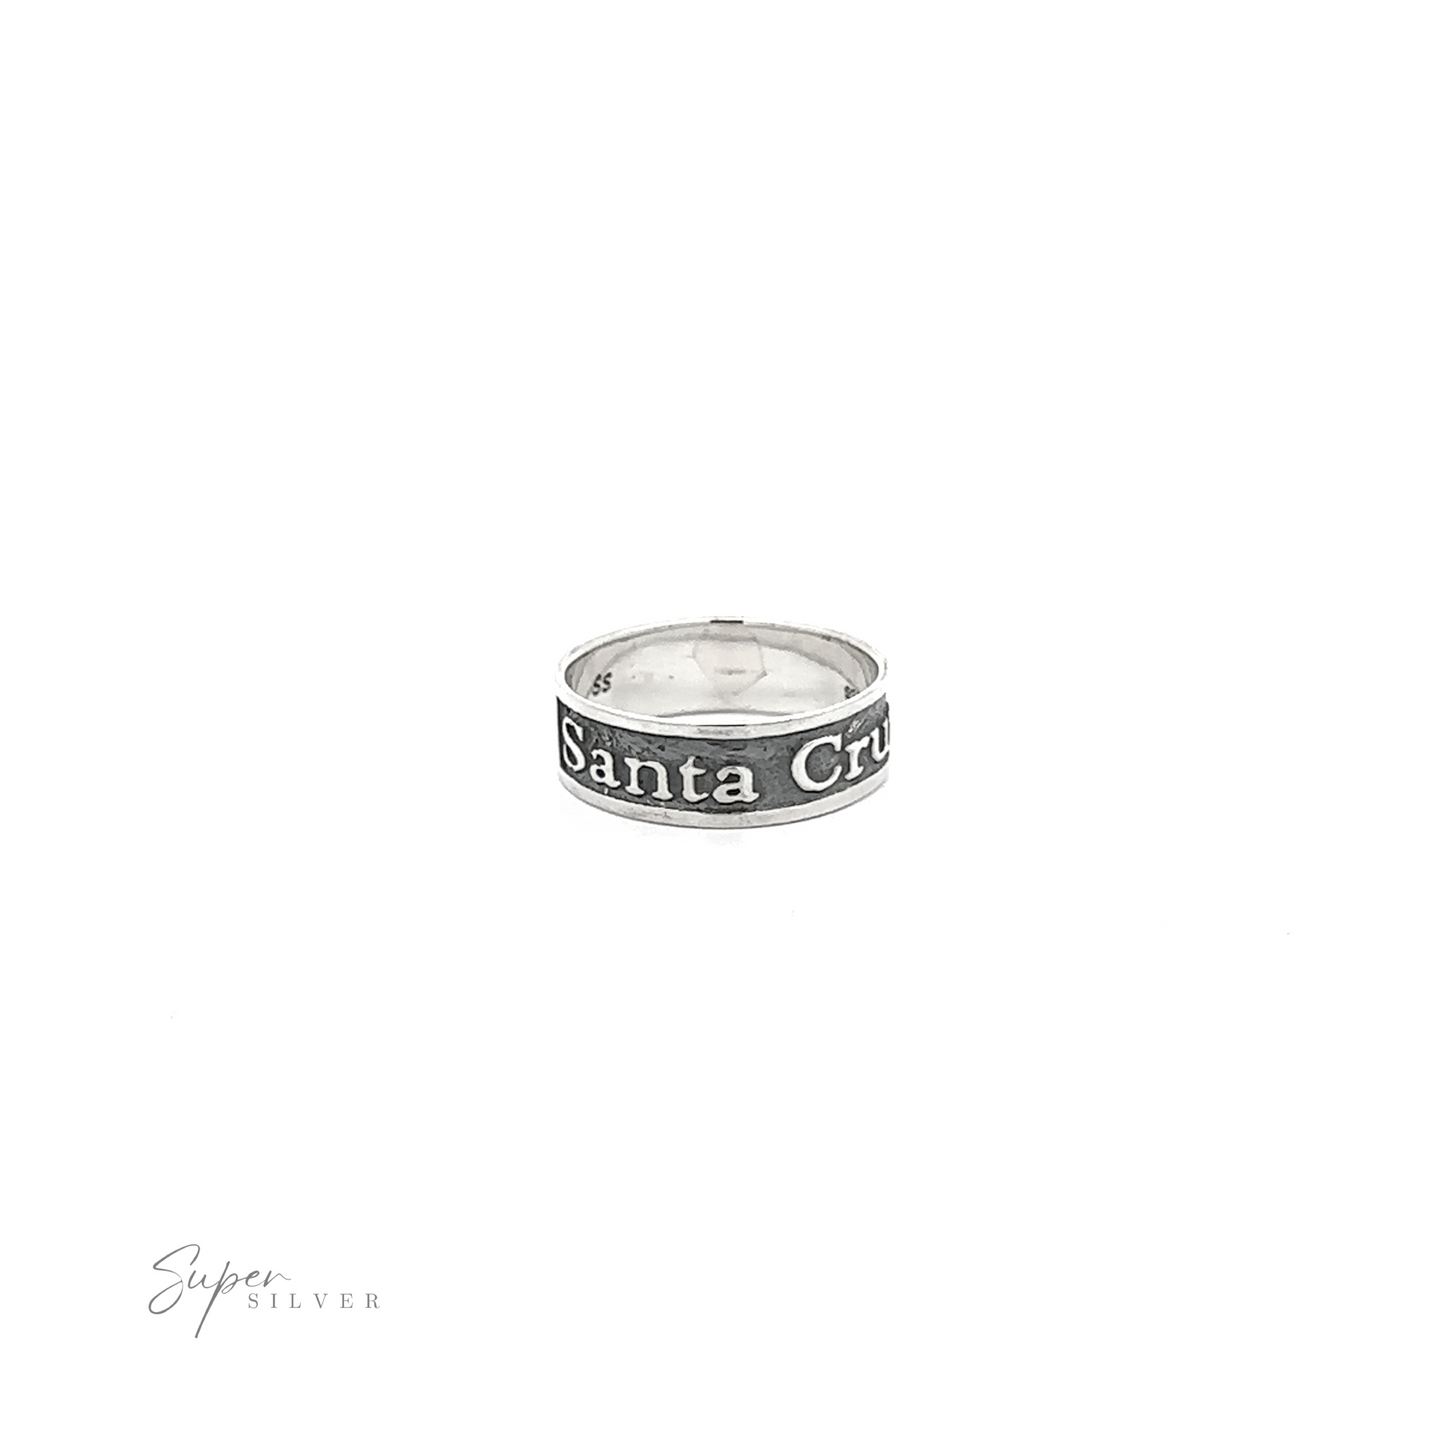 
                  
                    Sterling Silver Santa Cruz ring with "Santa Cruz" engraving.
                  
                